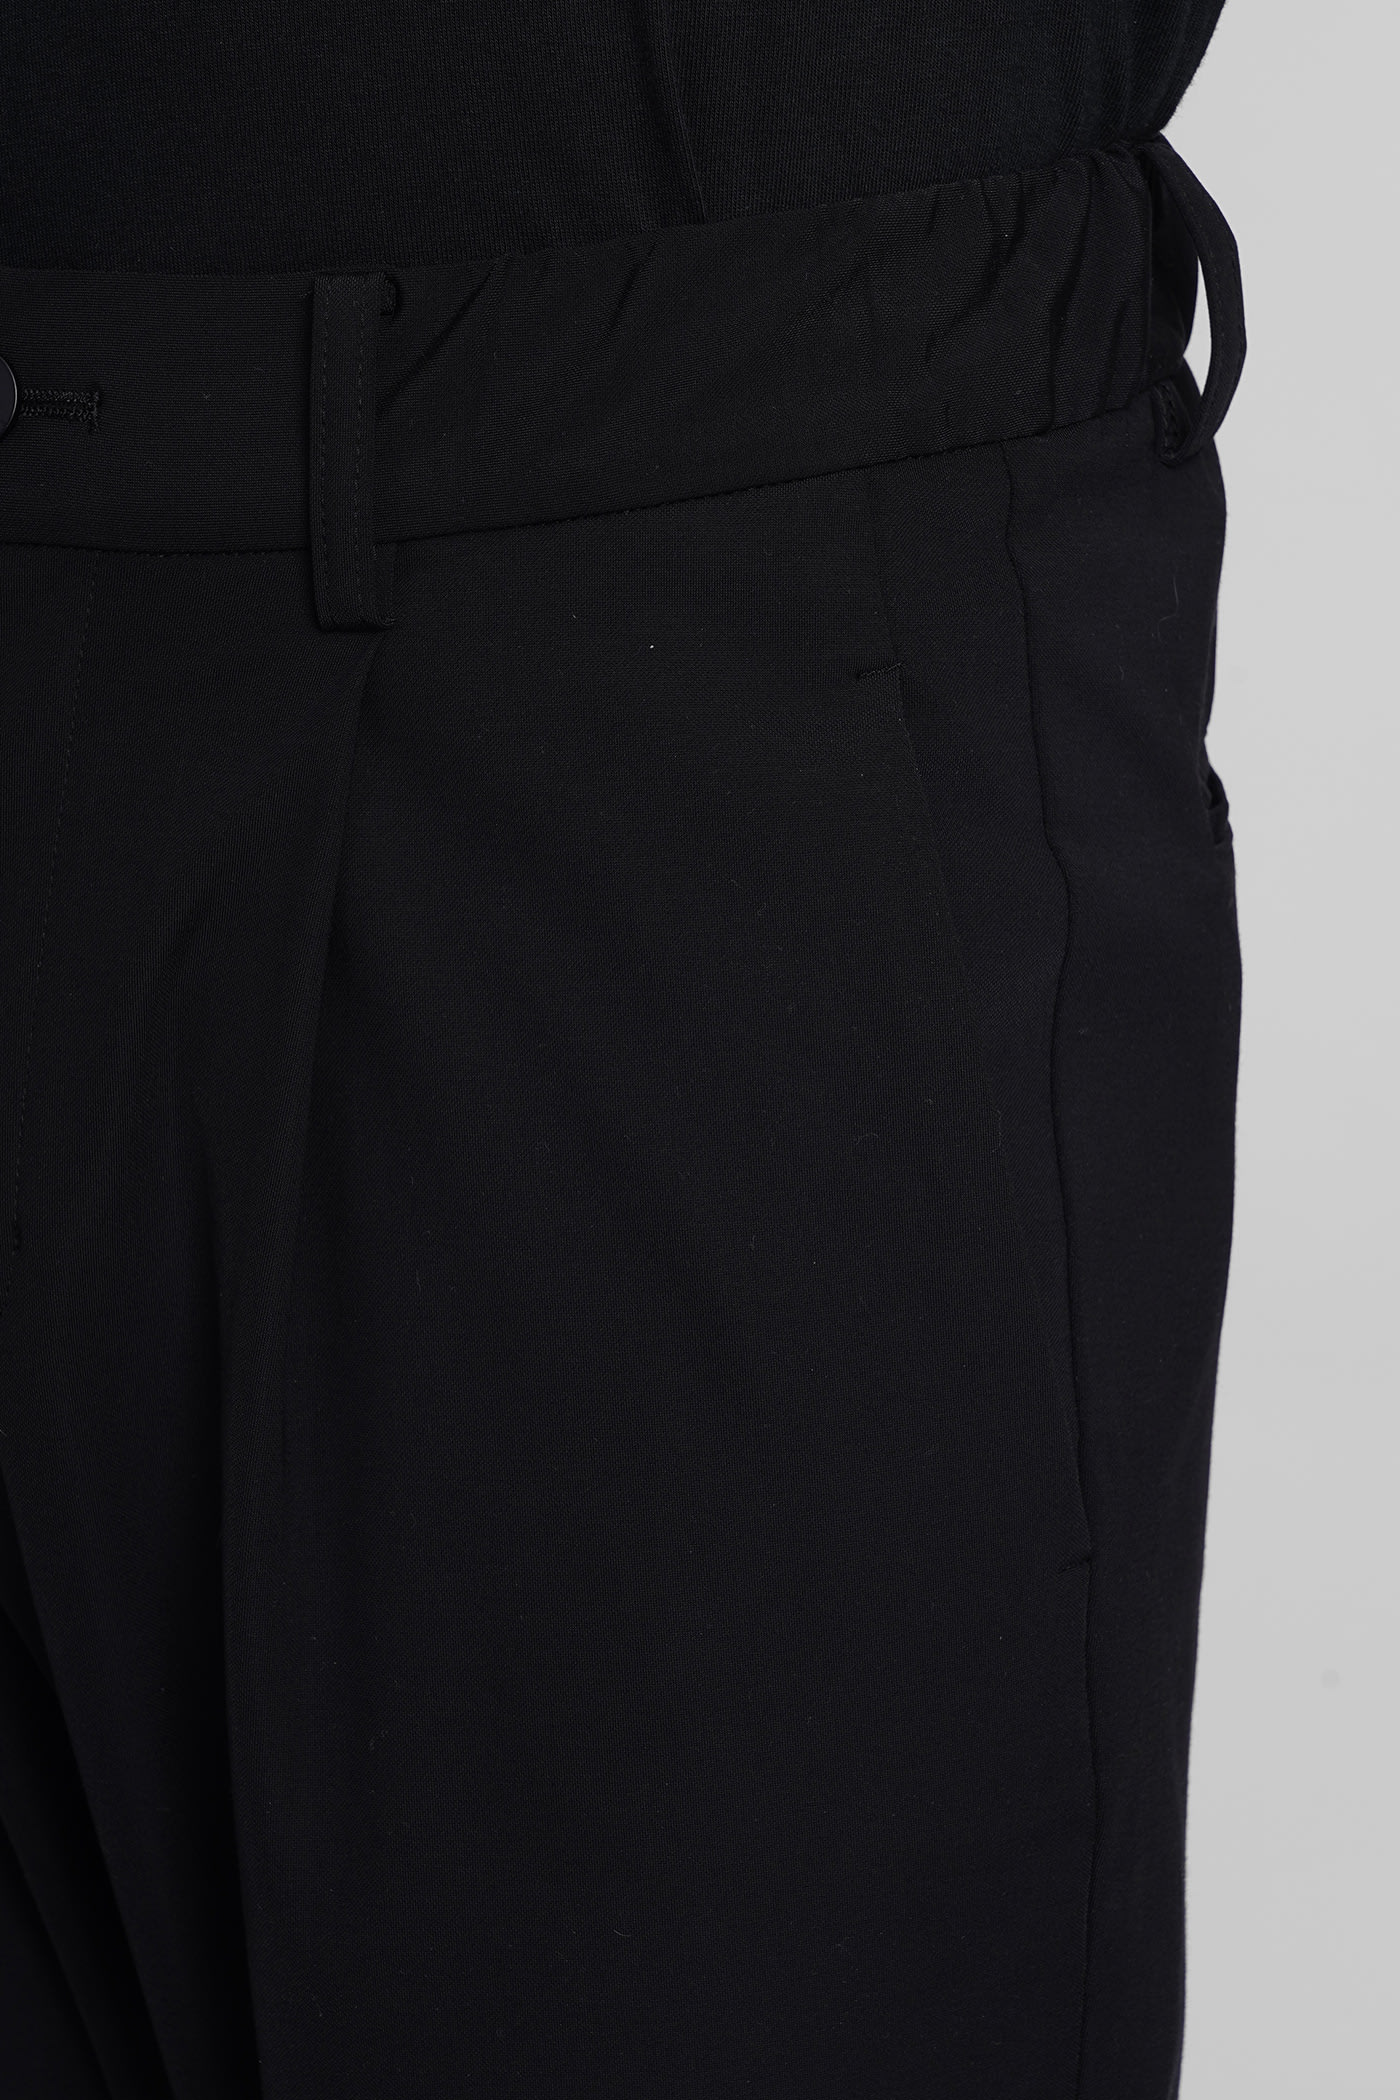 Shop Attachment Pants In Black Nylon